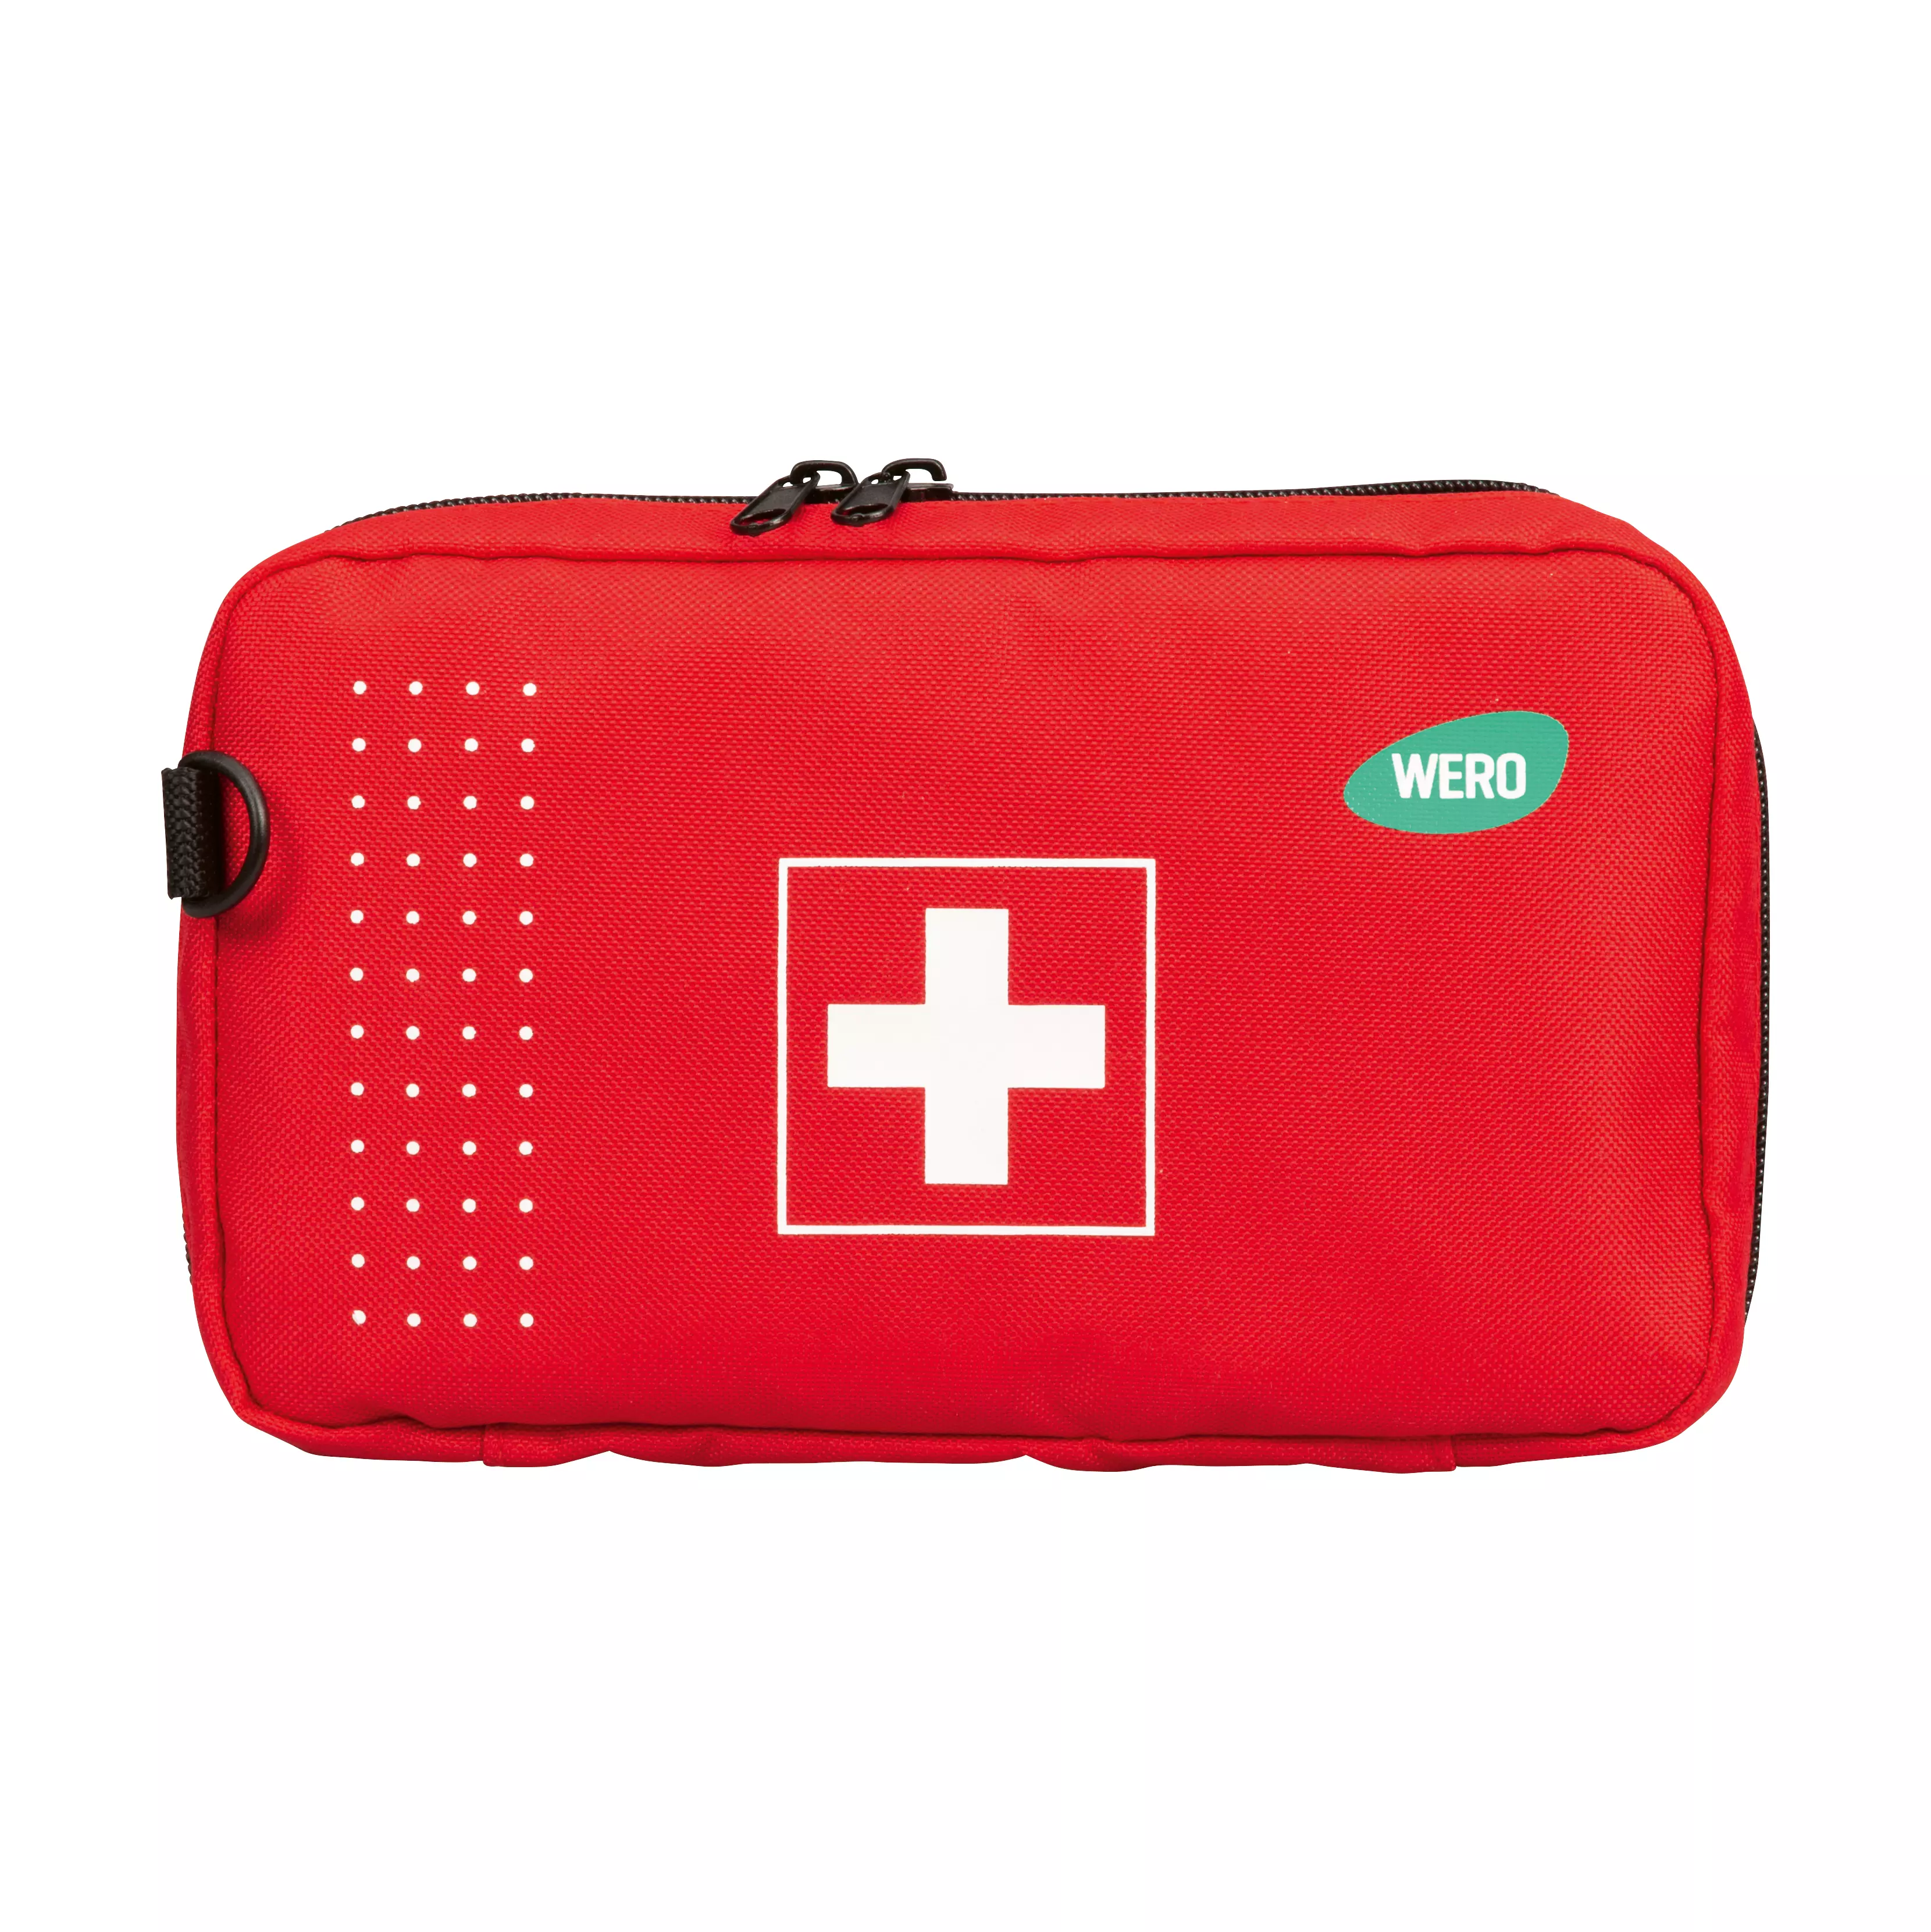 First aid bag WERO On-Tour